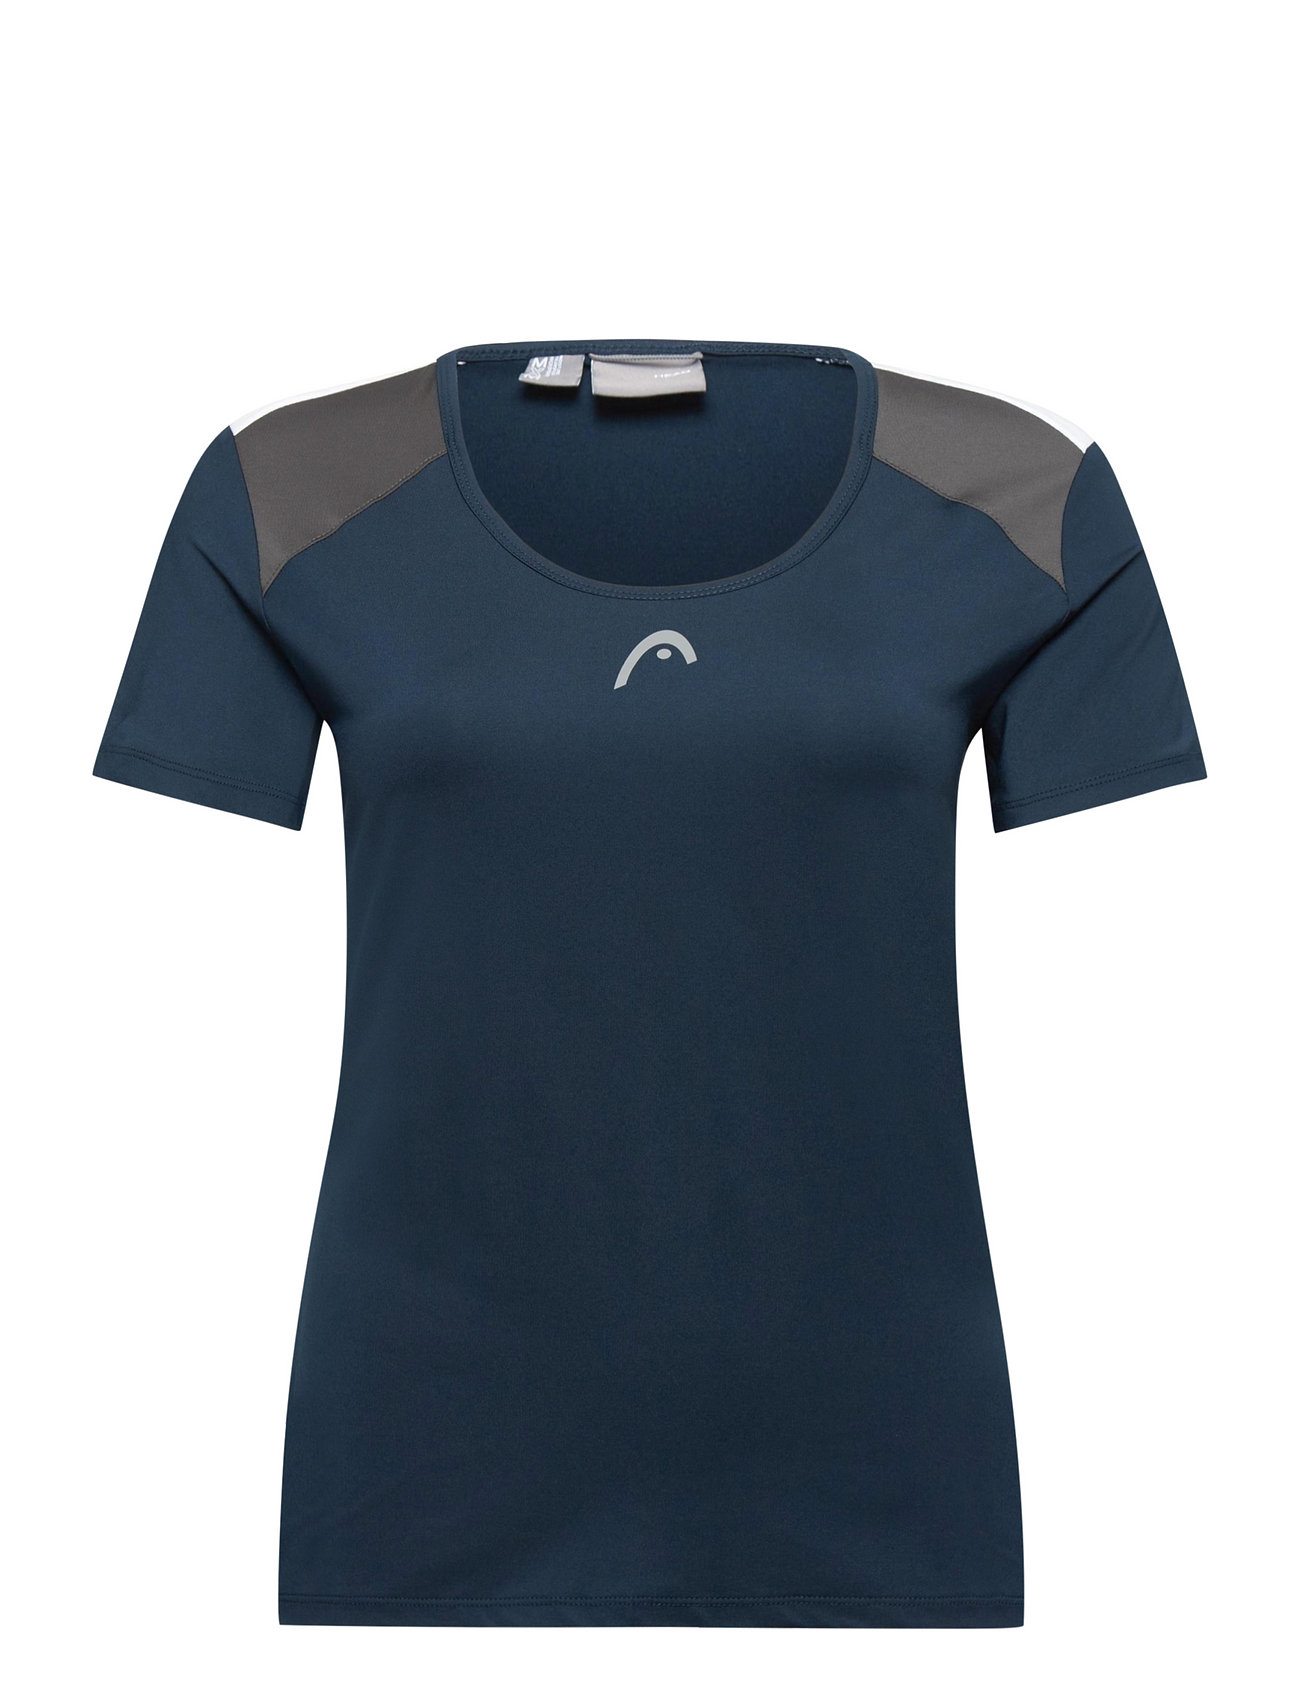 Club 22 Tech T-Shirt W T-shirts & Tops Short-sleeved Blå Head